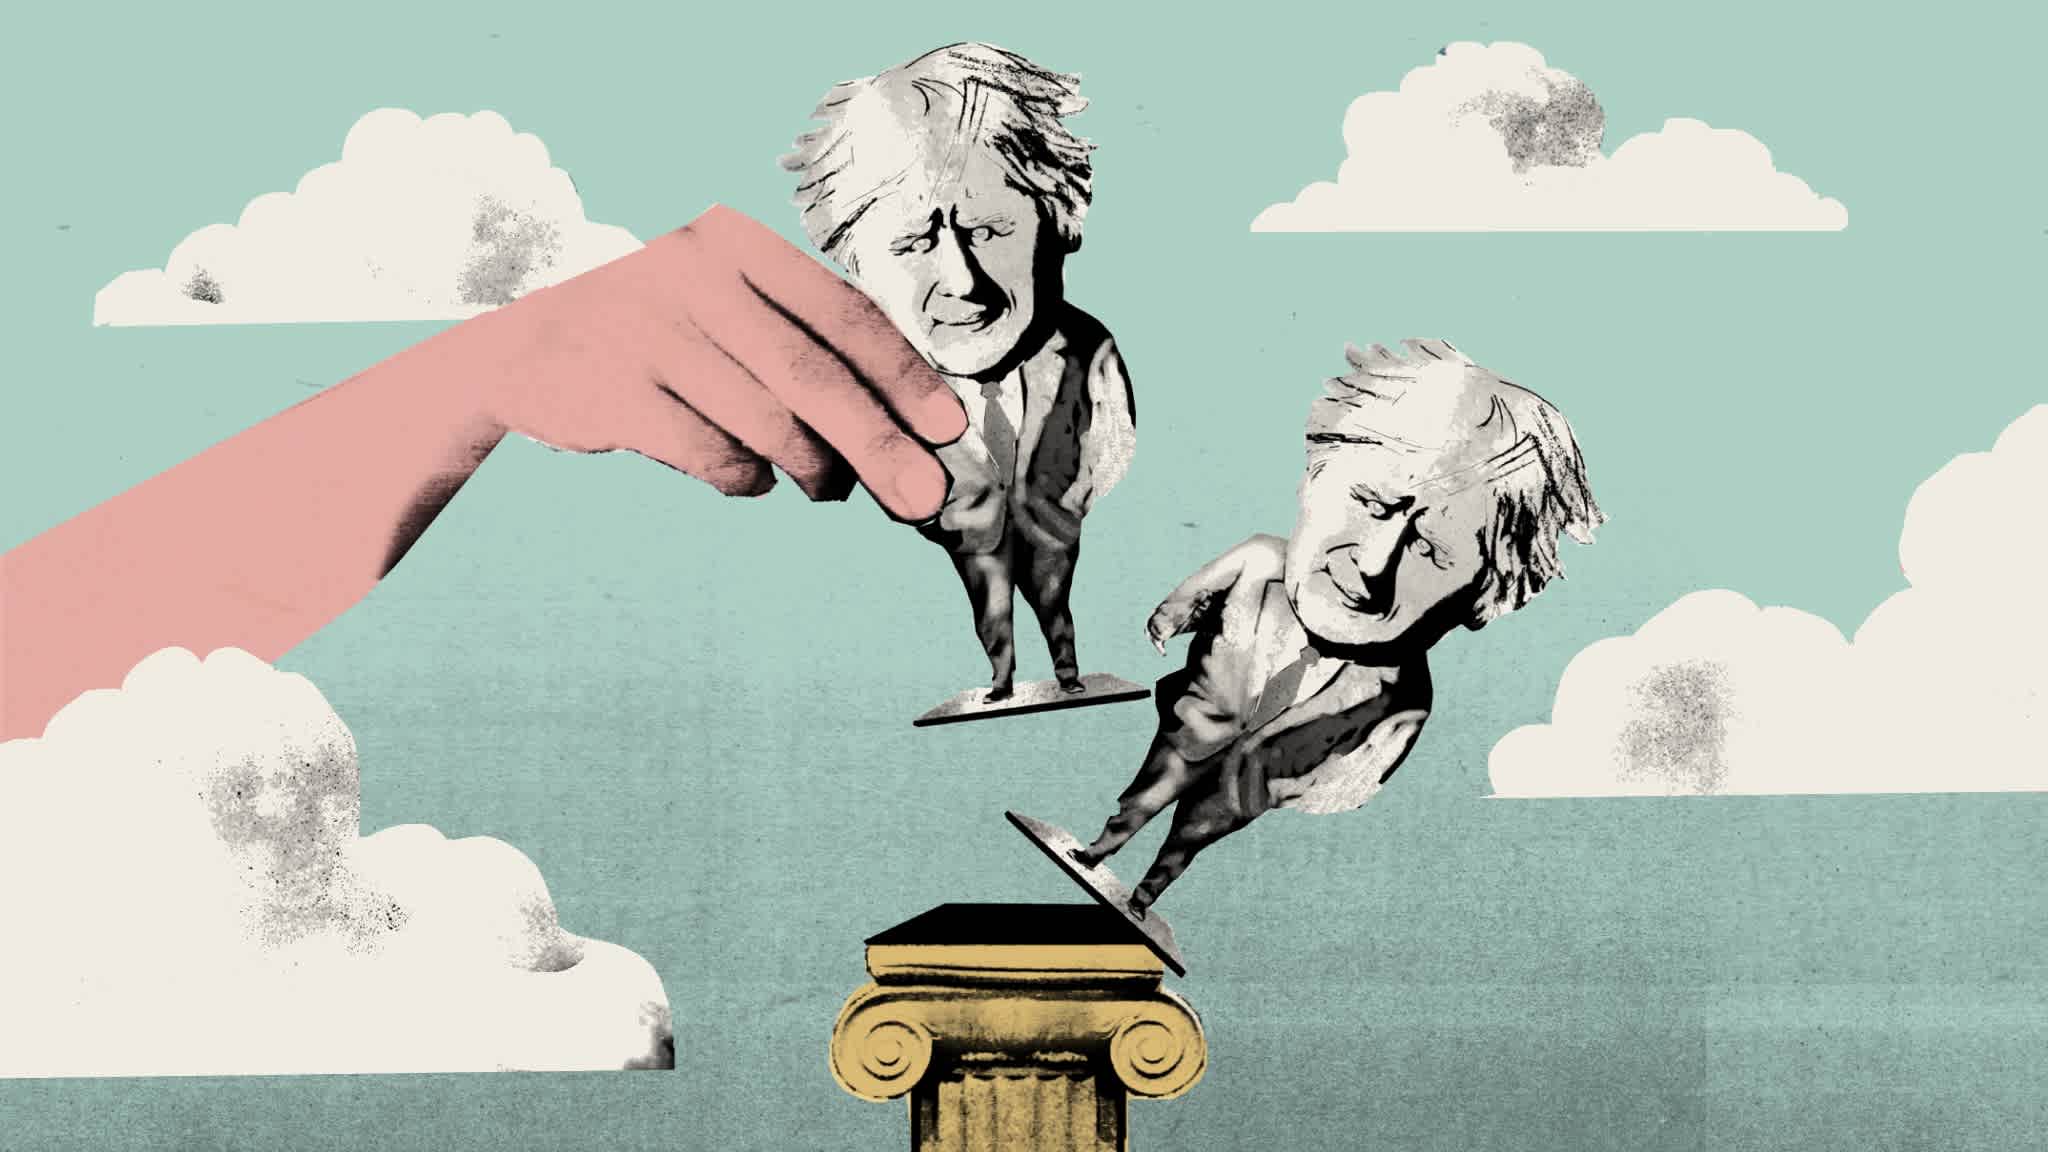 Boris Johnson’s fall would not change the Conservative agenda